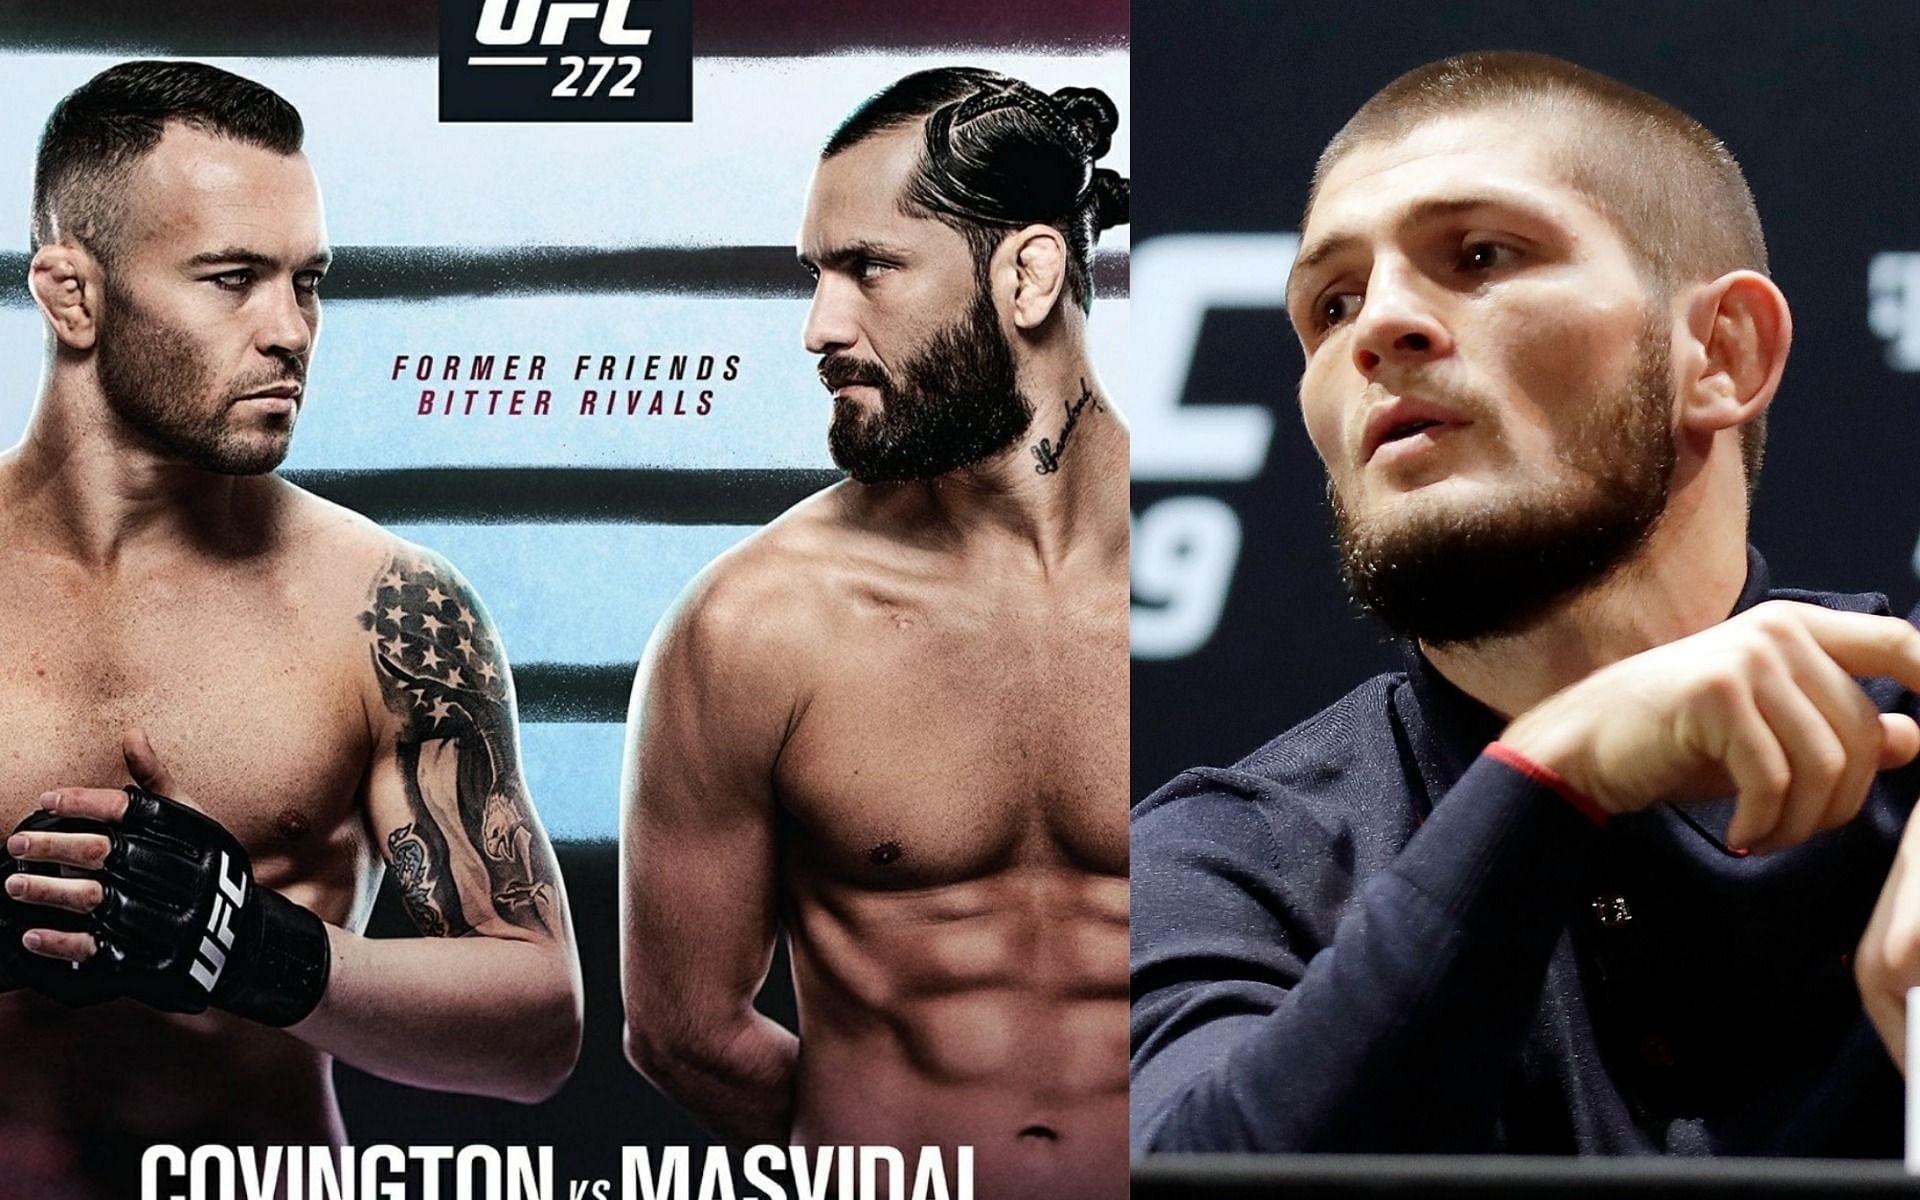 The official poster for UFC 272: Colby Covington vs. Jorge Masvidal (left; Credits: UFC.com) and Khabib Nurmagomedov (right)